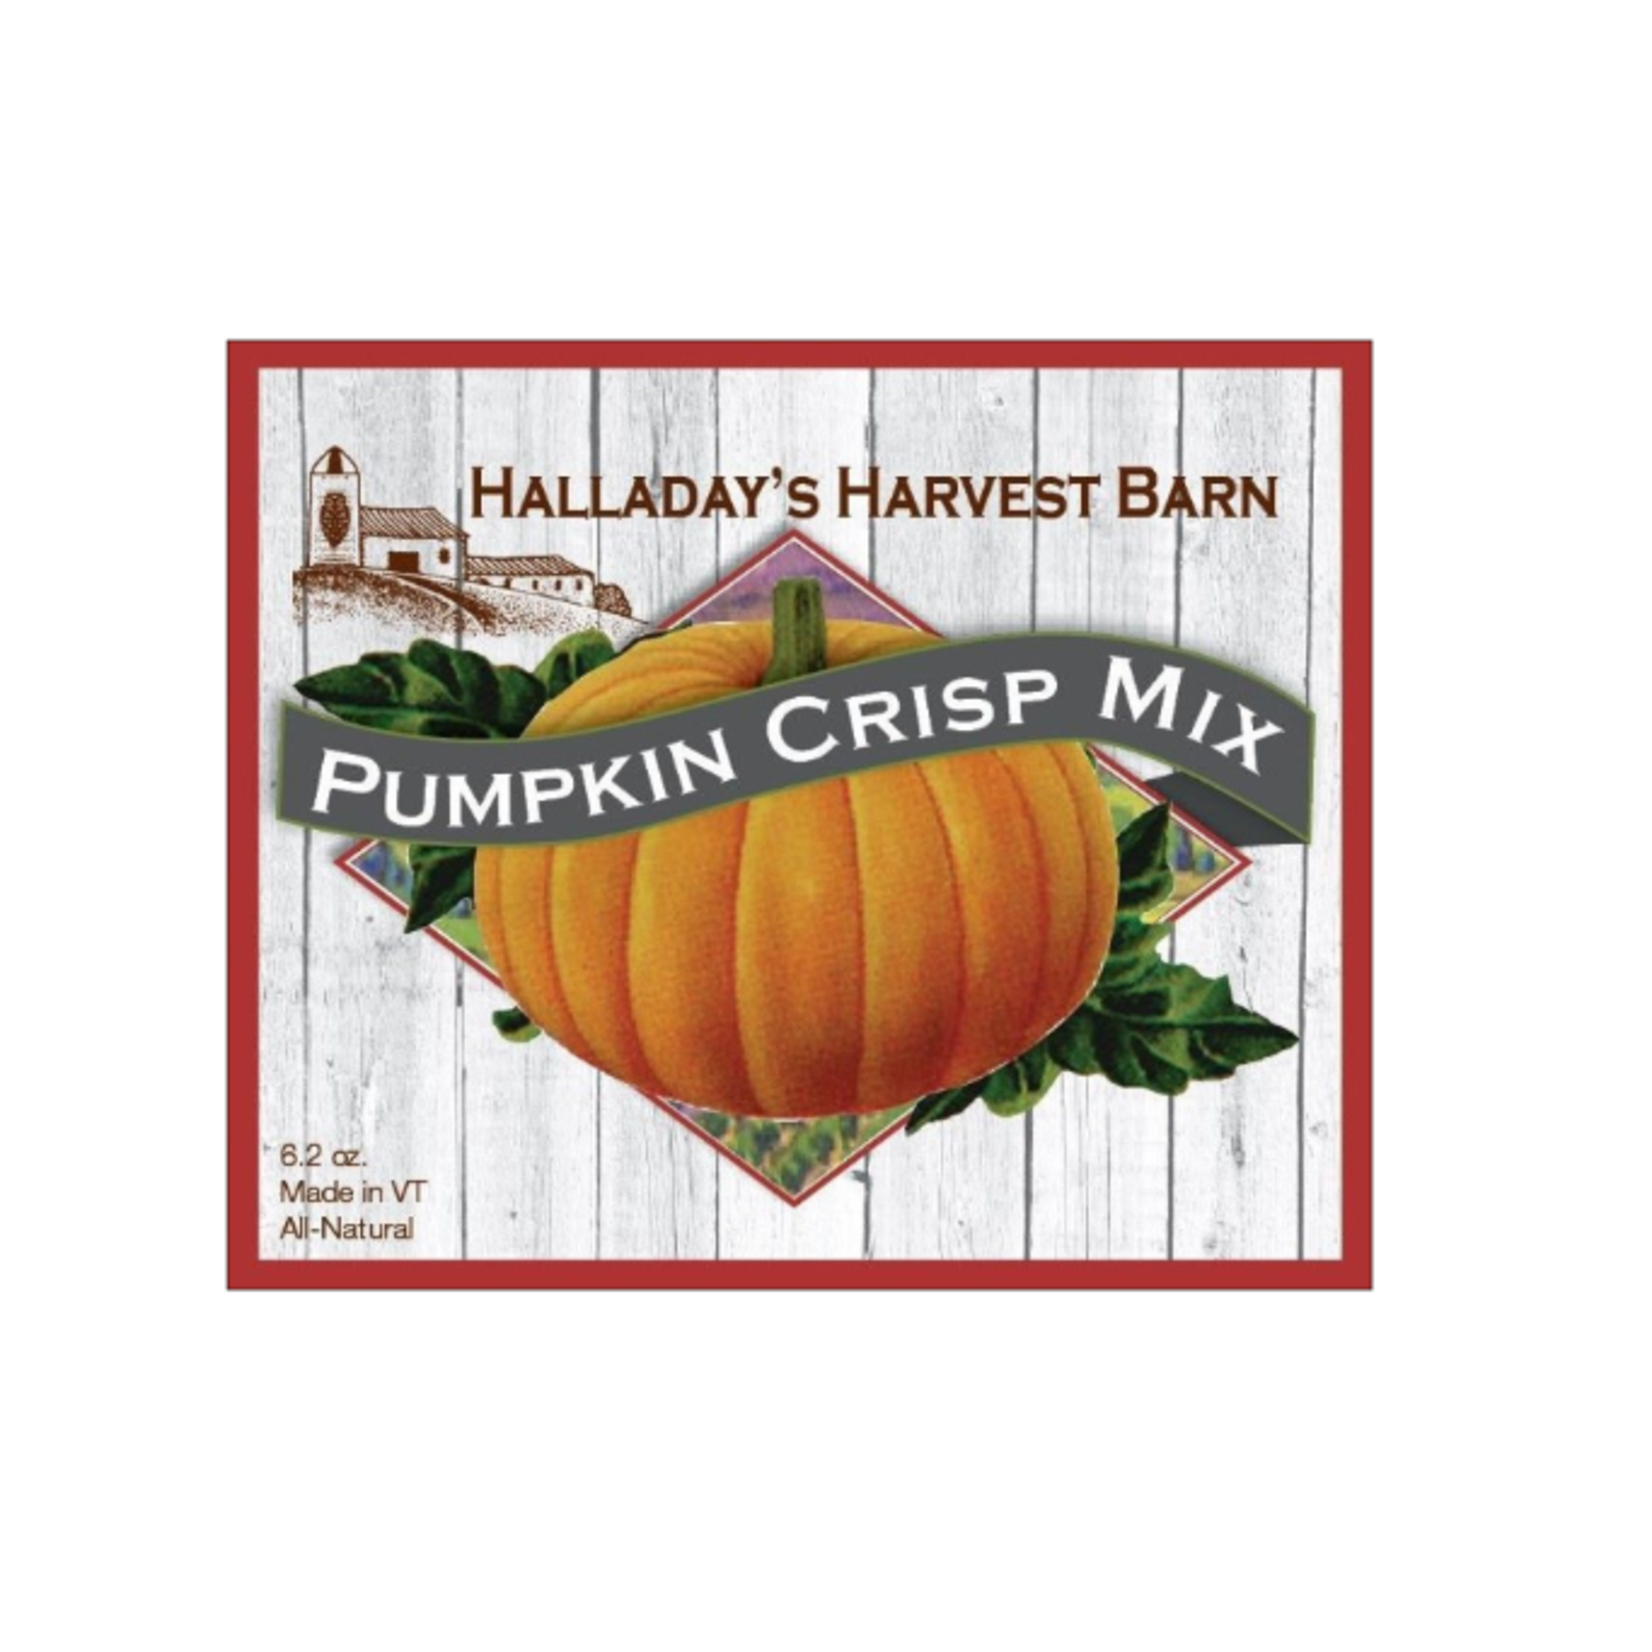 Halladay's Harvest Barn Pumpkin Crisp Mix